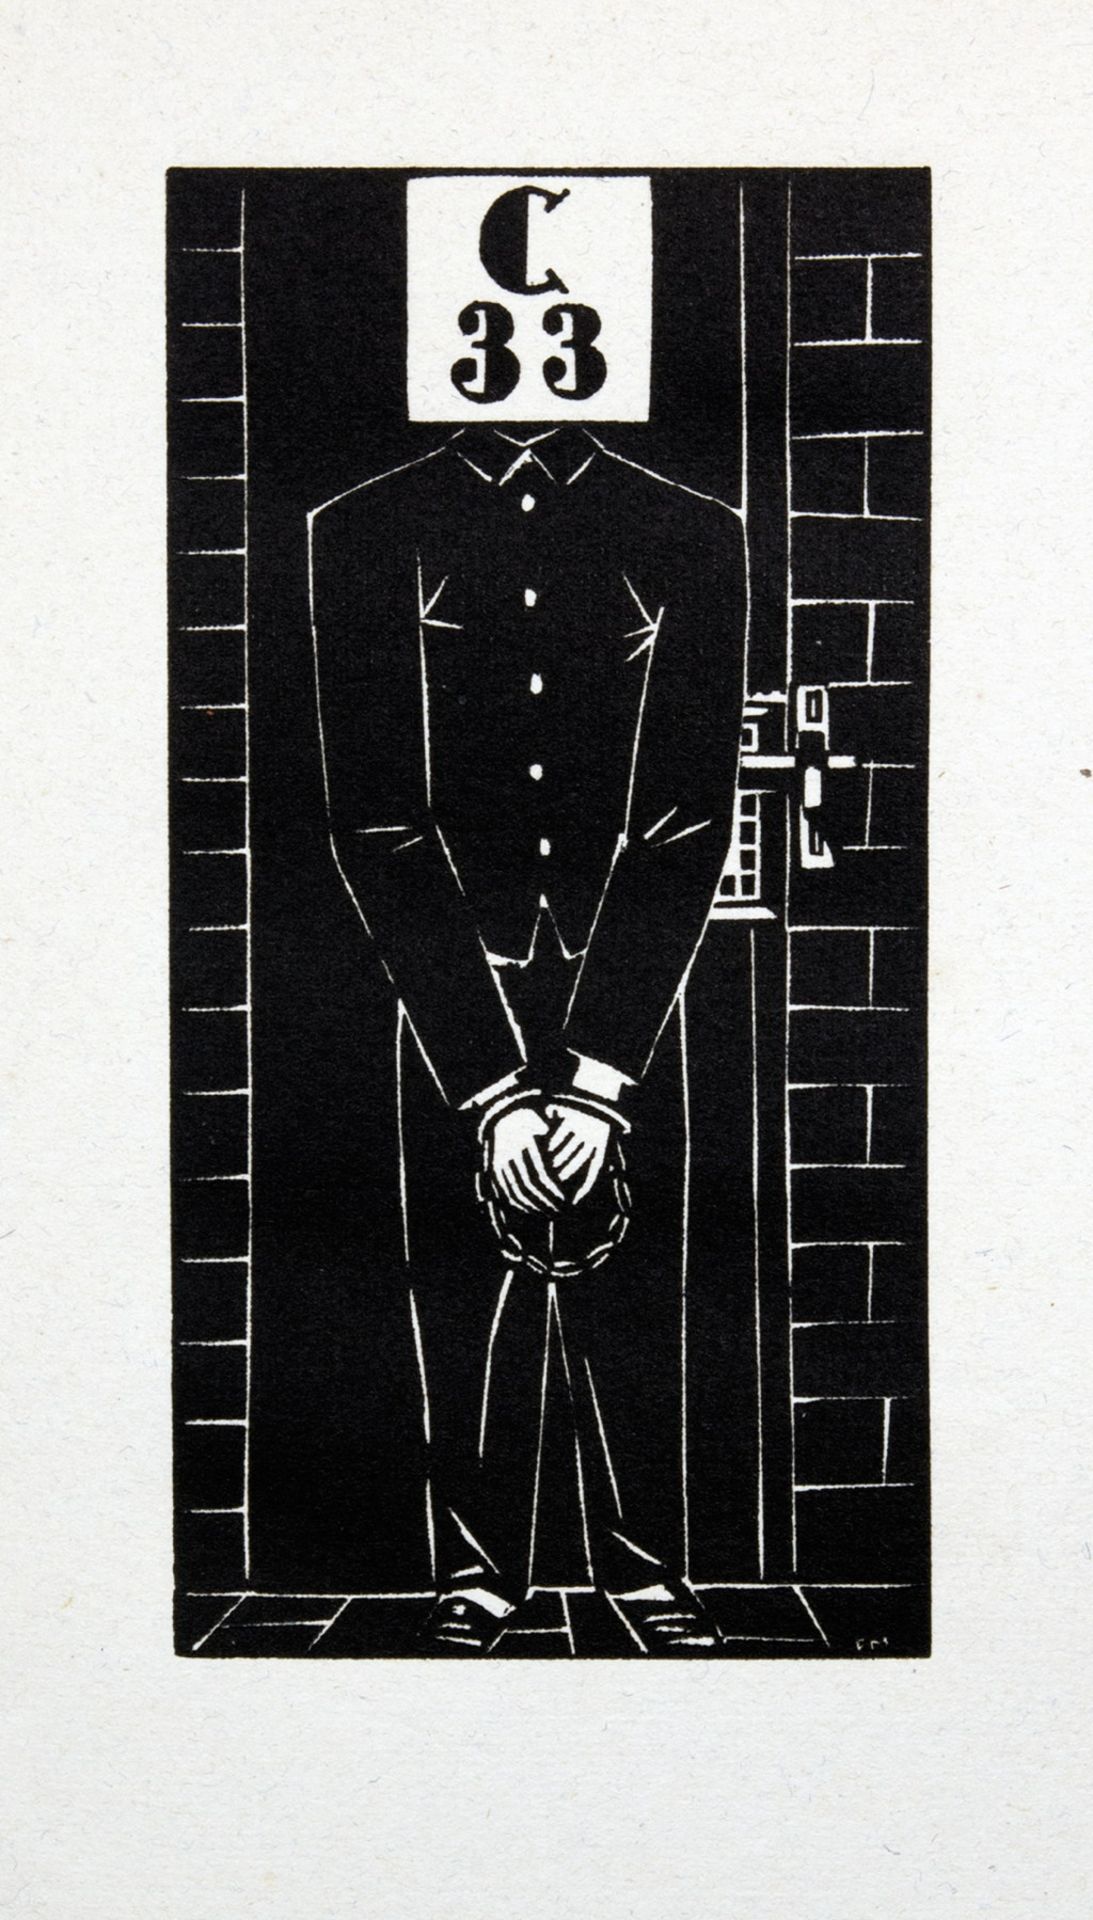 Frans Masereel - Wilde. The Ballad of Reading Gaol. 1923